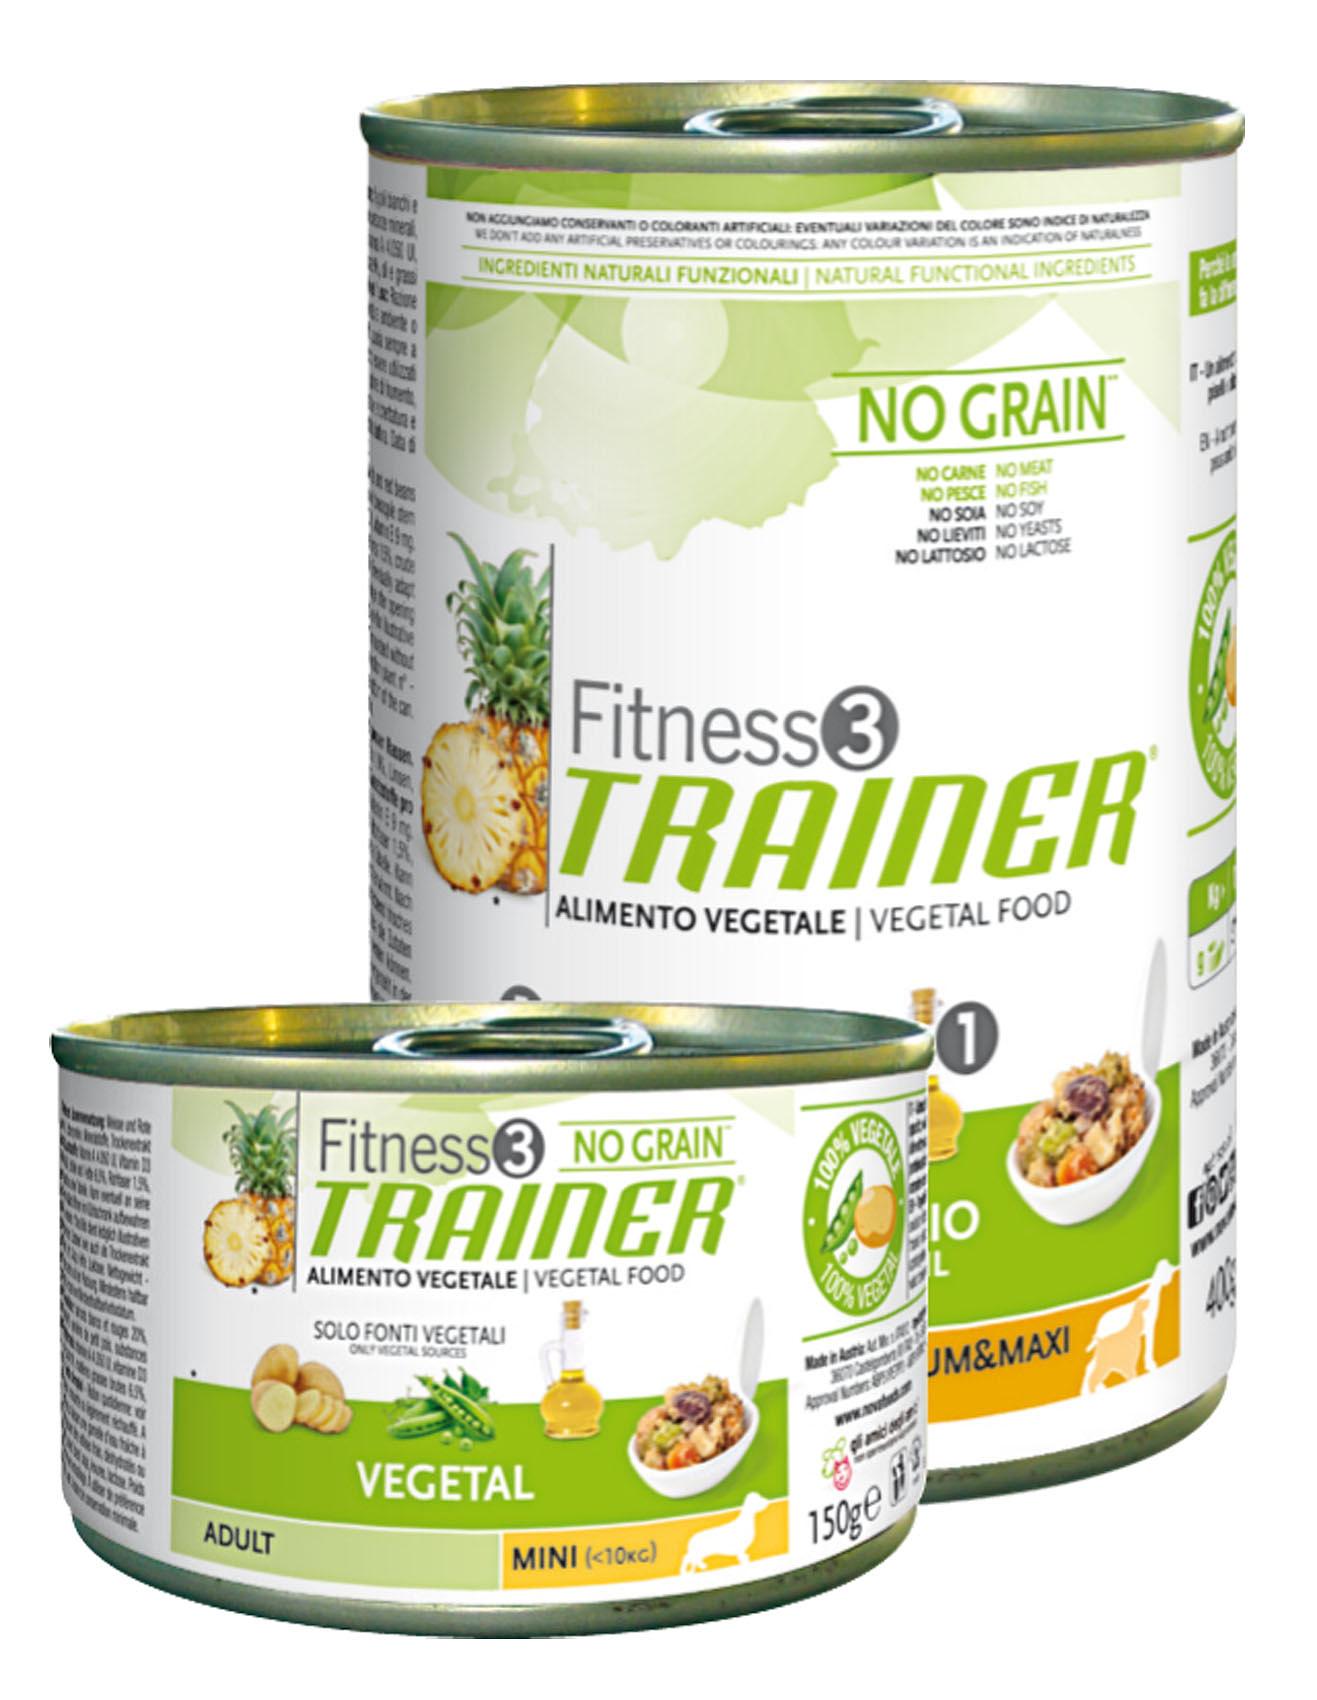 Trainer Fitness3 Adult, No Grain, Vegetal